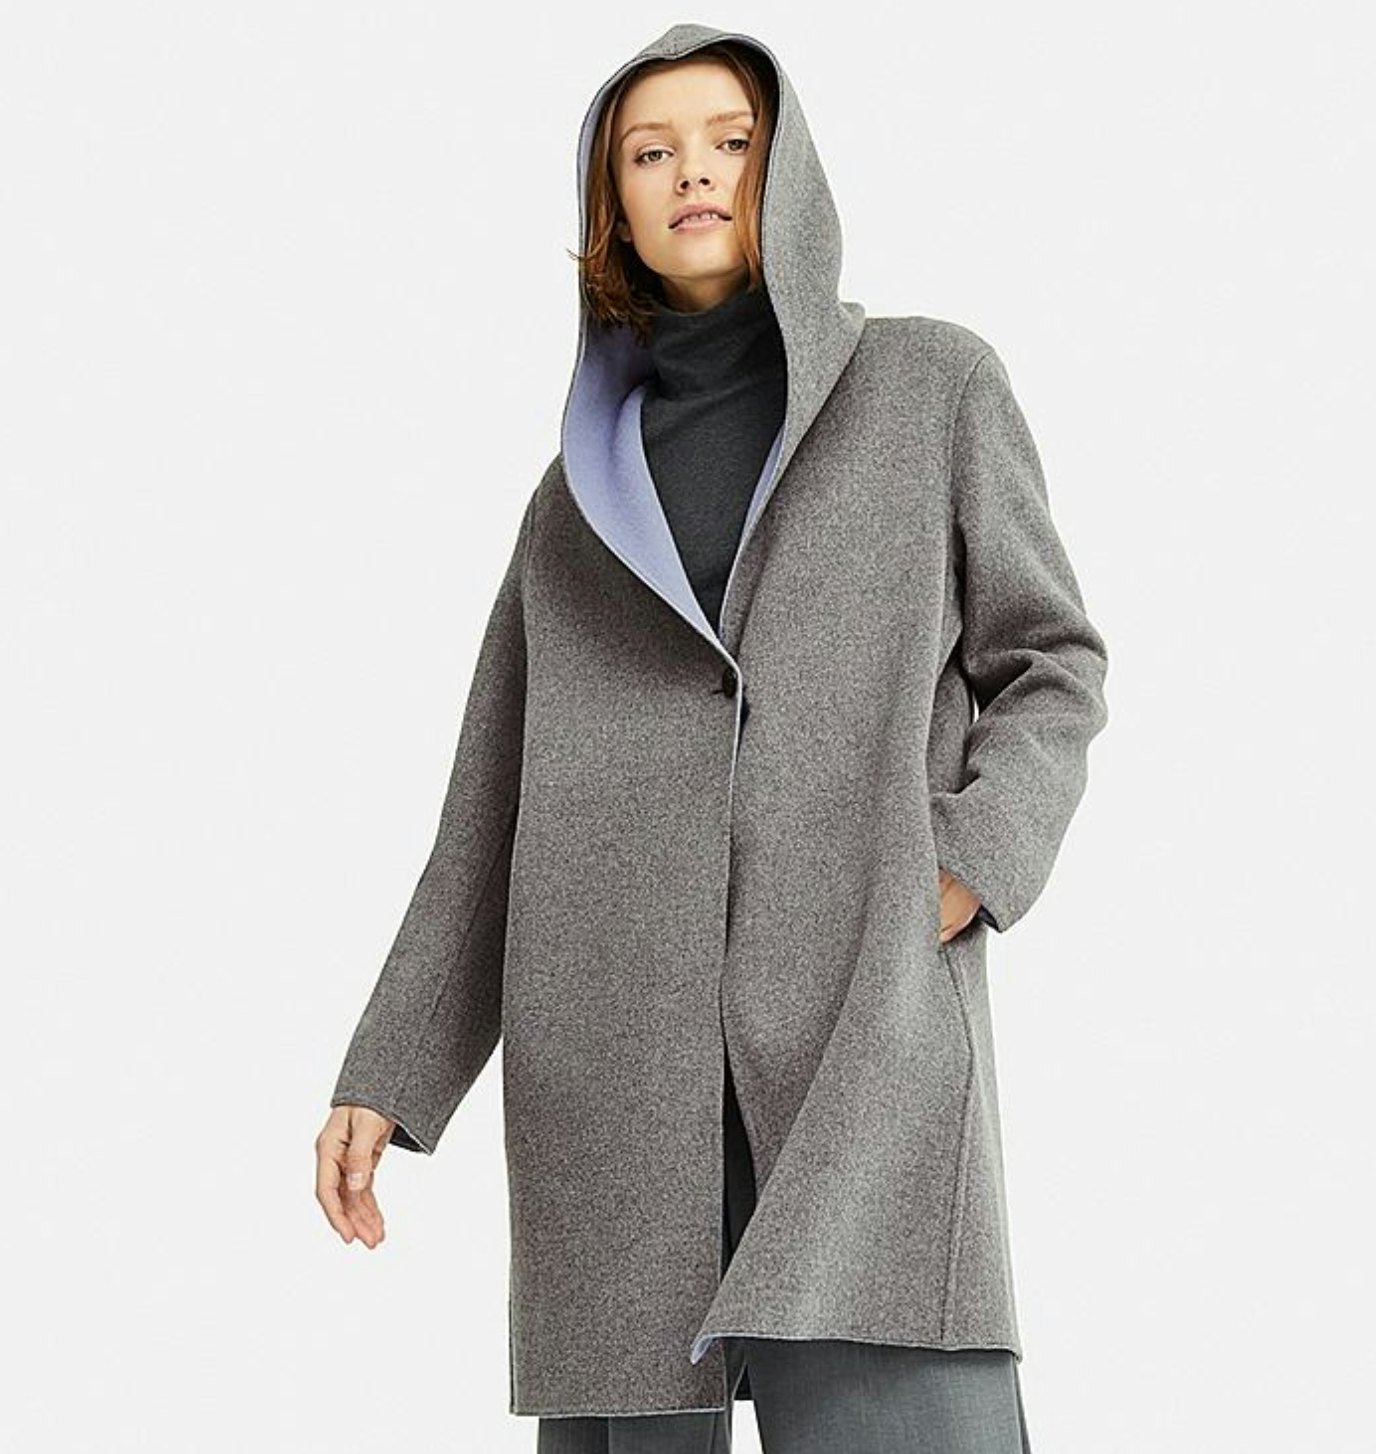 Winter Coats Under $100 To Buy Before 